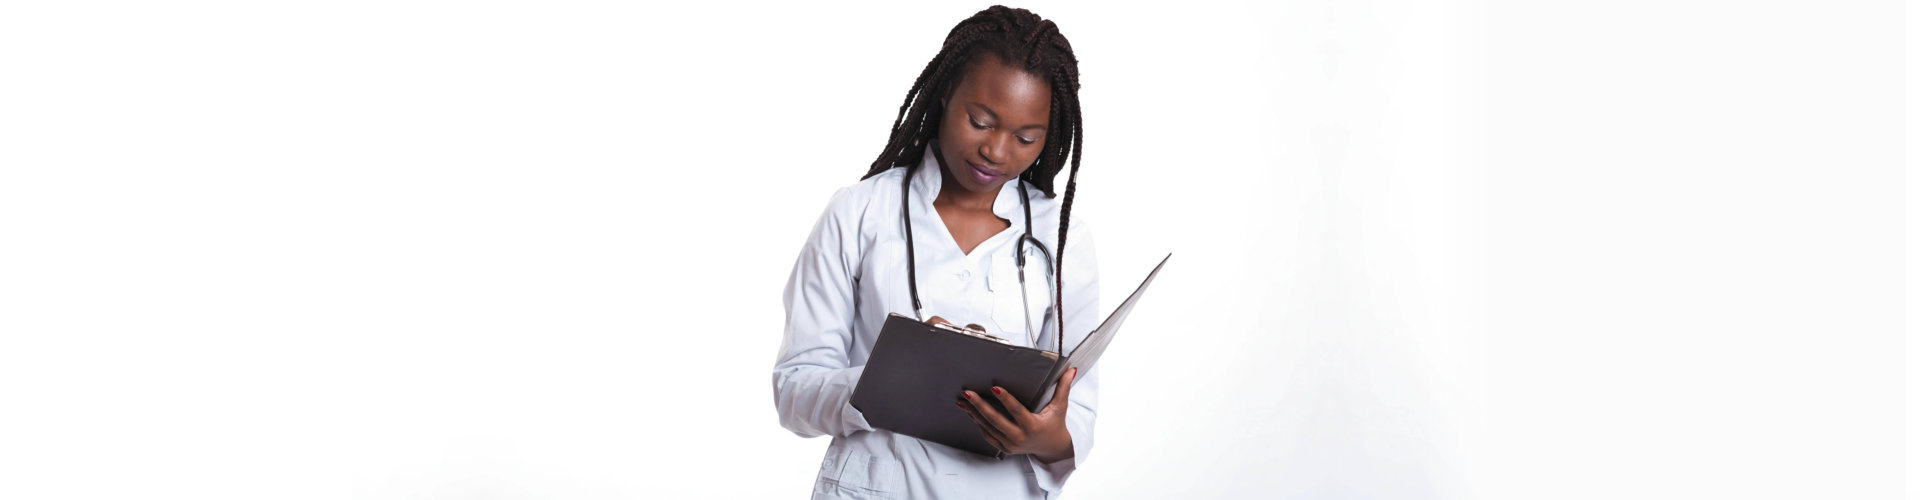 nurse looking at medical records